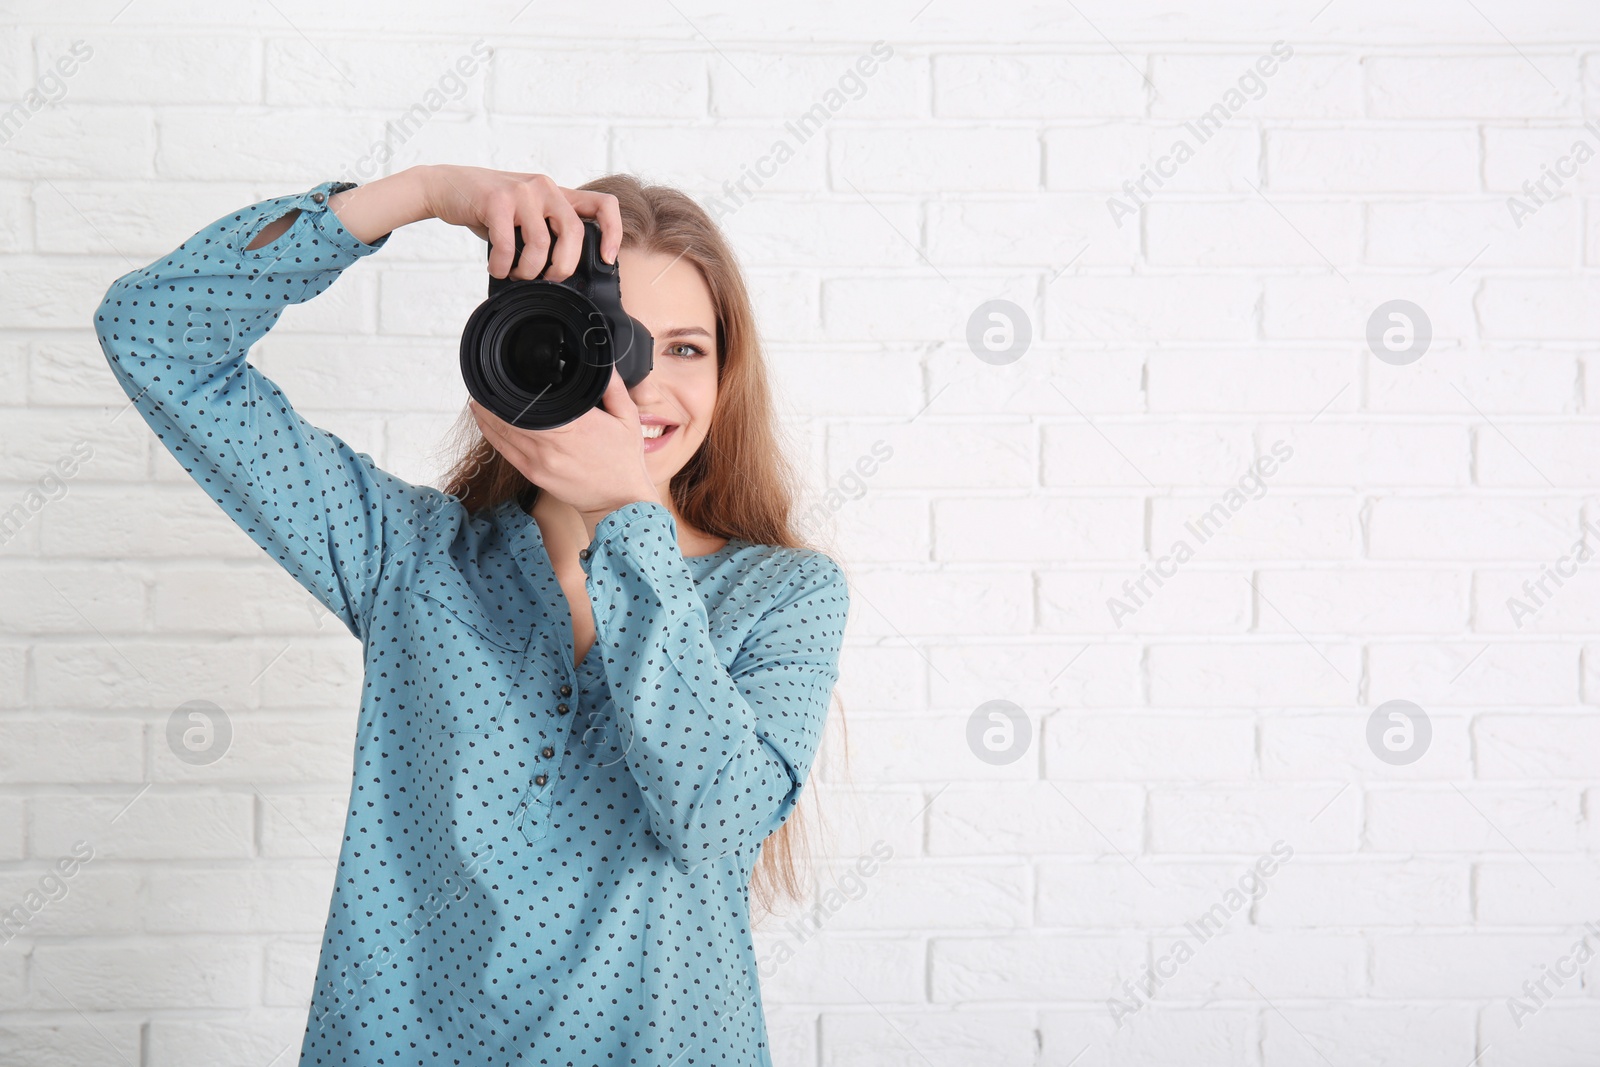 Photo of Female photographer with camera on brick background